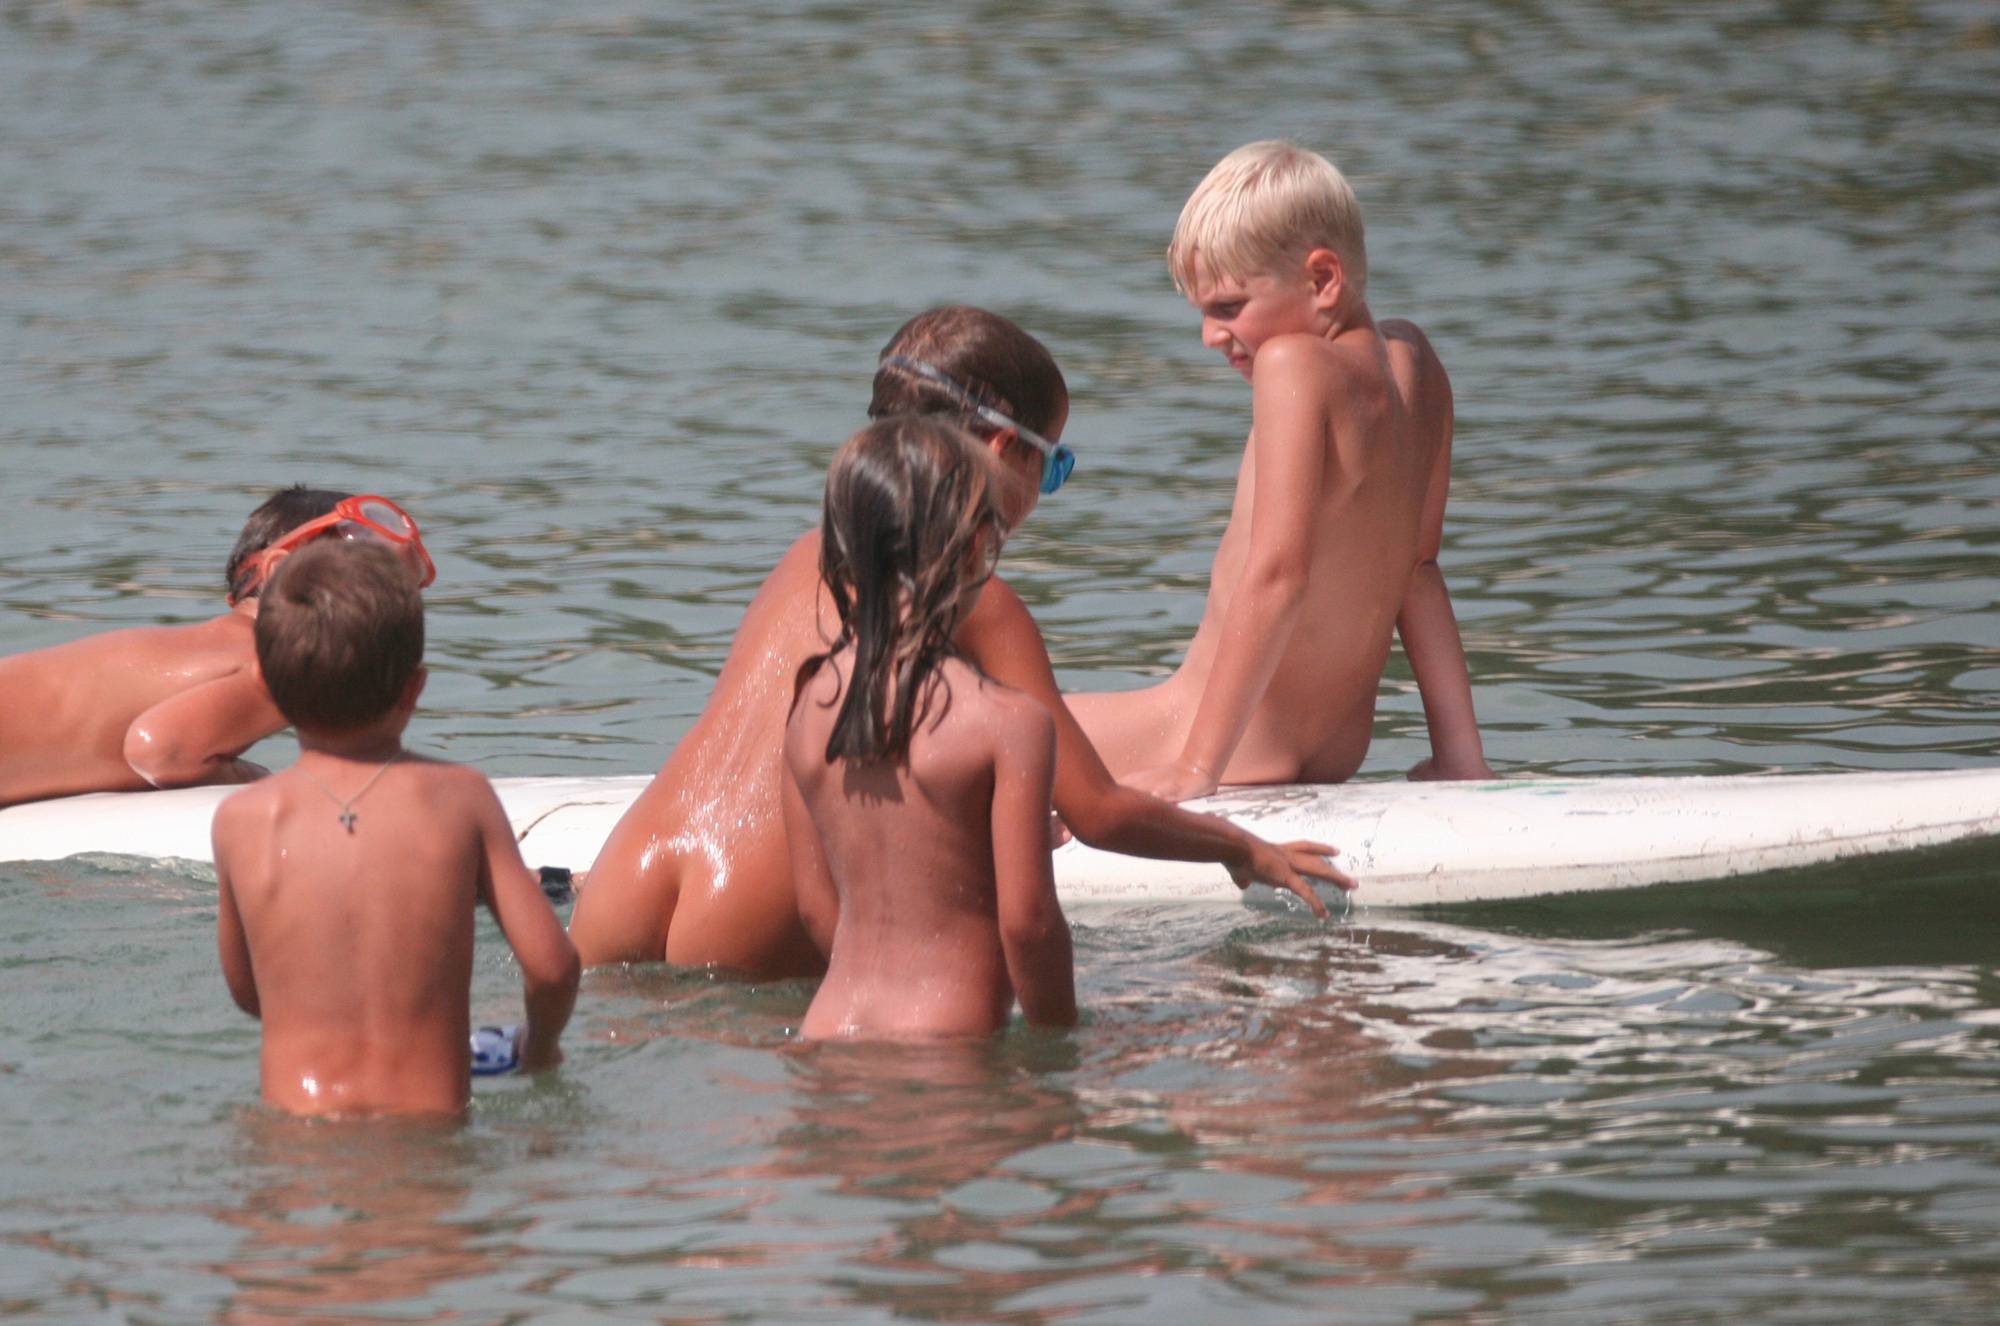 Several Kids On Surfboard - 2